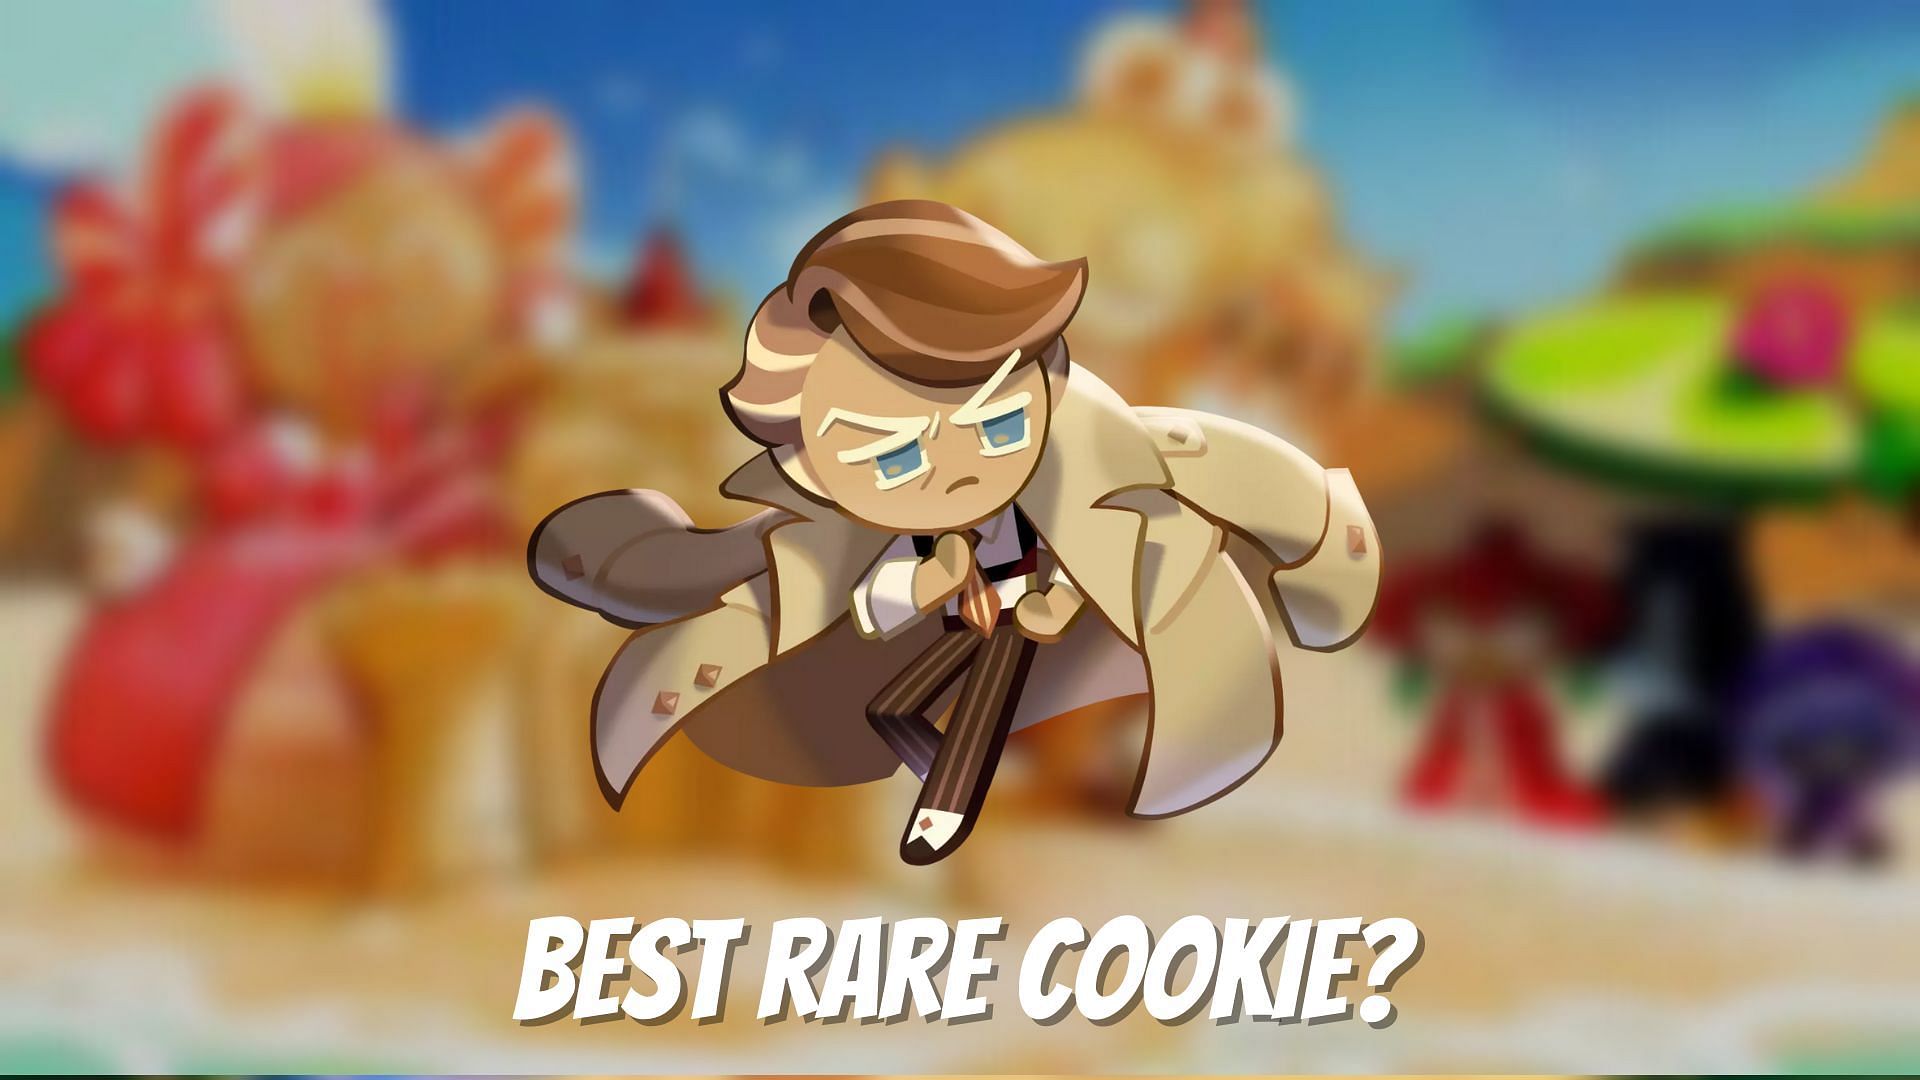 Rare Cookies are the second lowest rarity in Cookie Run: Kingdom (Image via Sportskeeda)